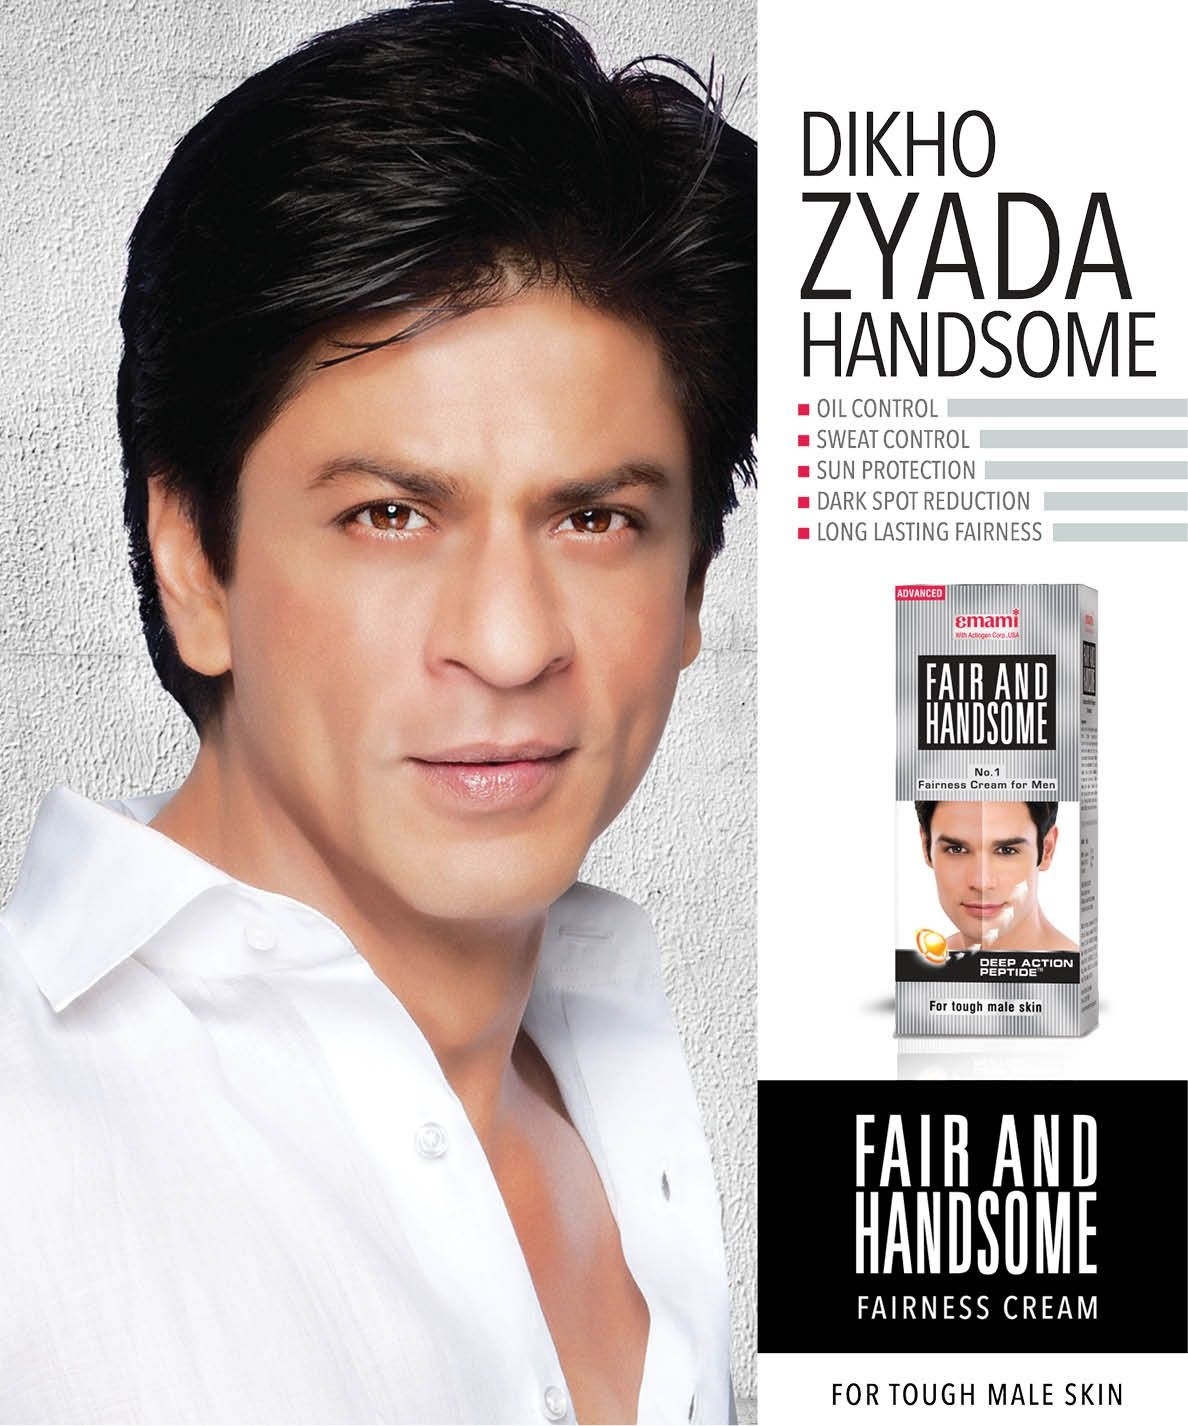 SRK in a fairness cream ad